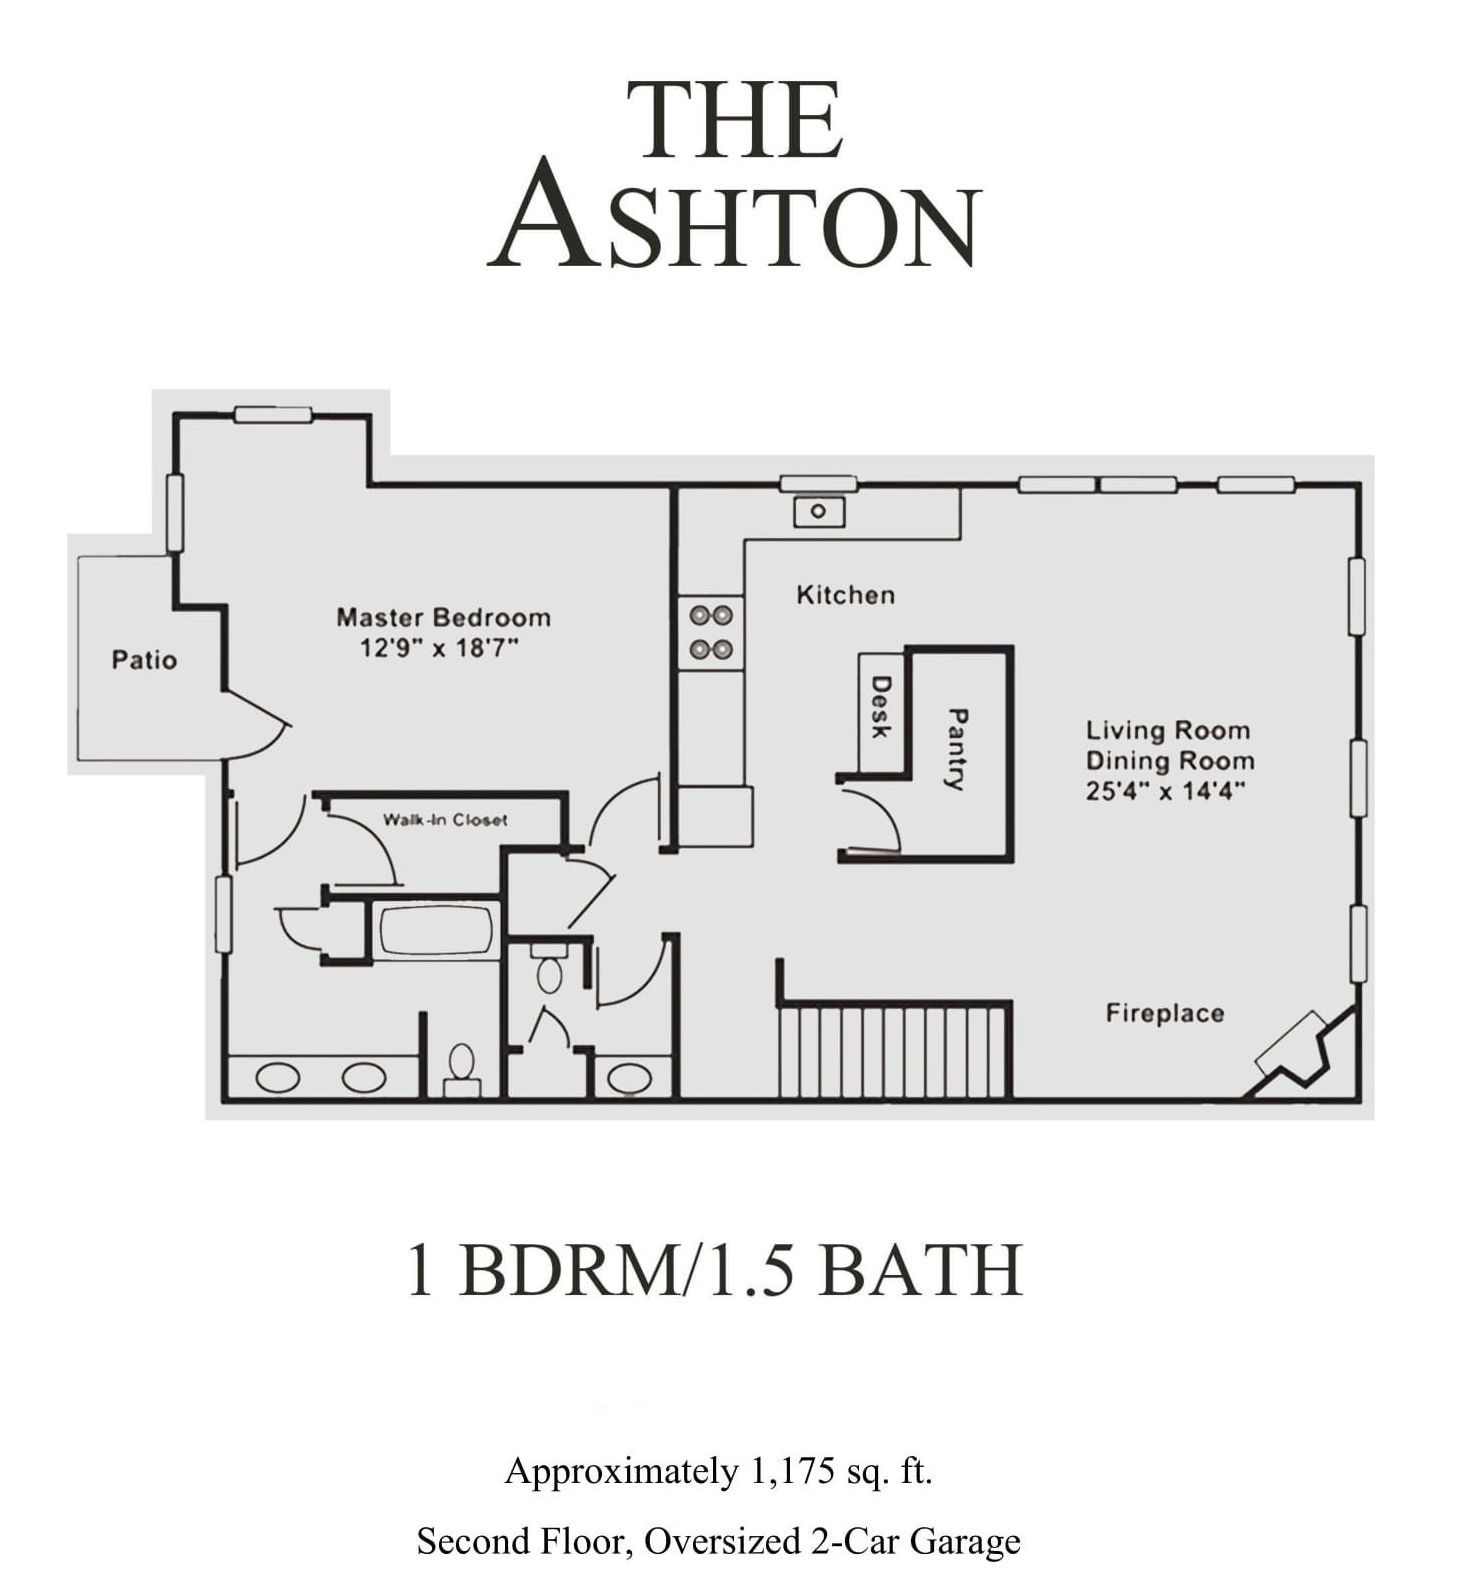 Ashton floor plan drawing